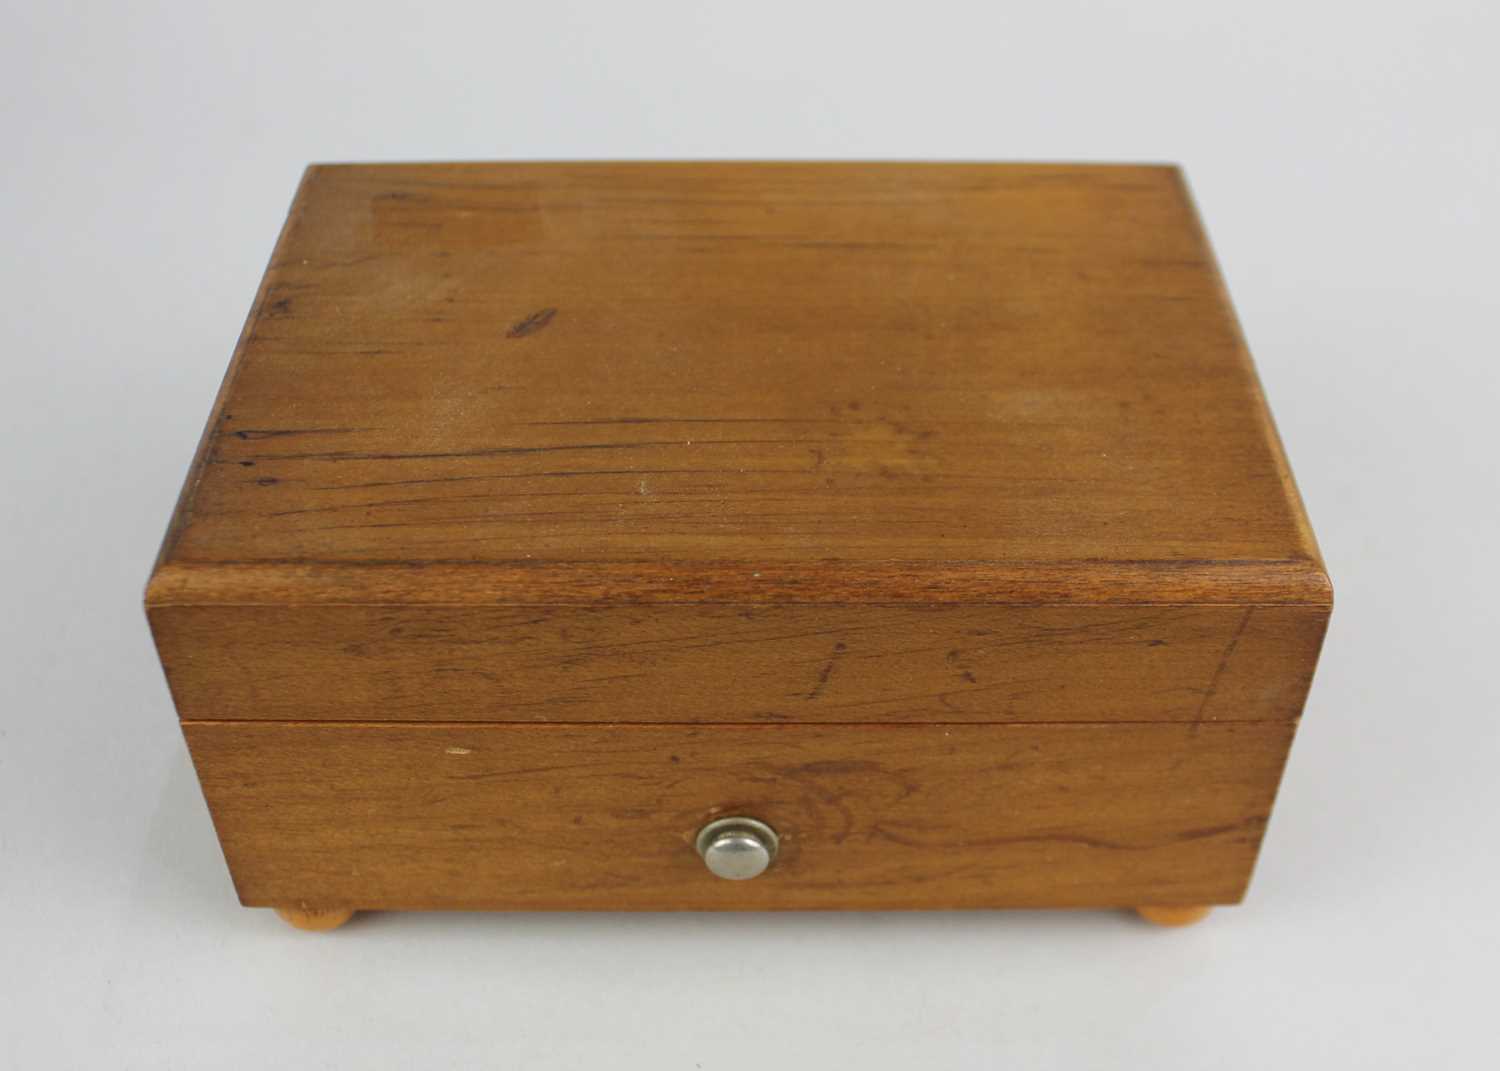 A Swiss small music box in plain rectangular wooden case with slide button switch, label beneath ' - Bild 2 aus 3